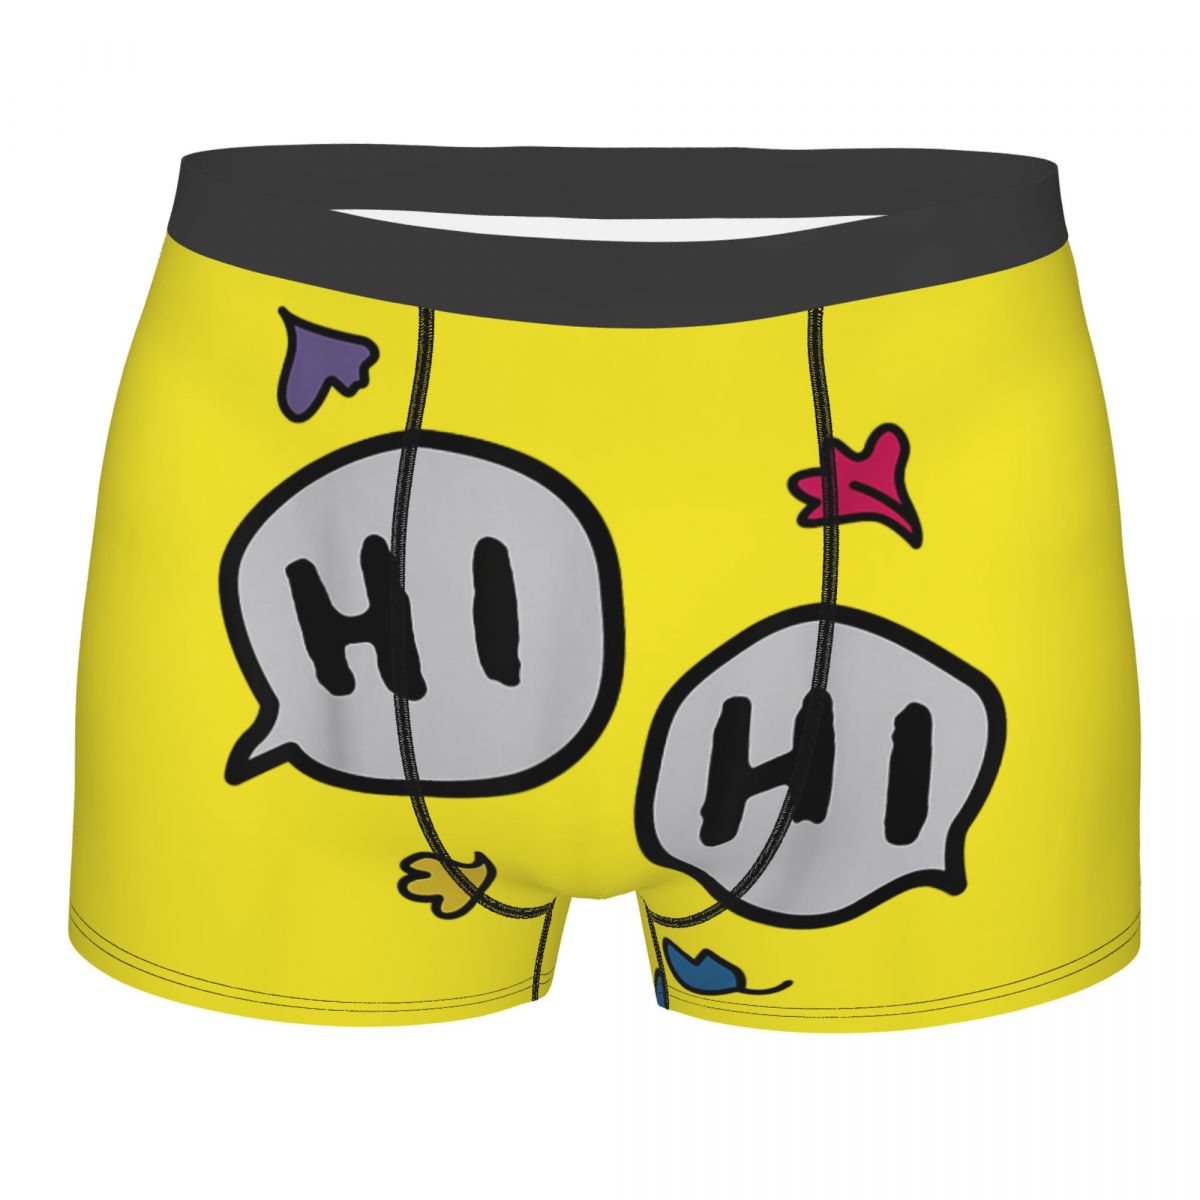 Heartstopper Men's Panties Hi Funny Lover LGBT Men Boxer Underwear Cotton for Male Large Size Lot Soft